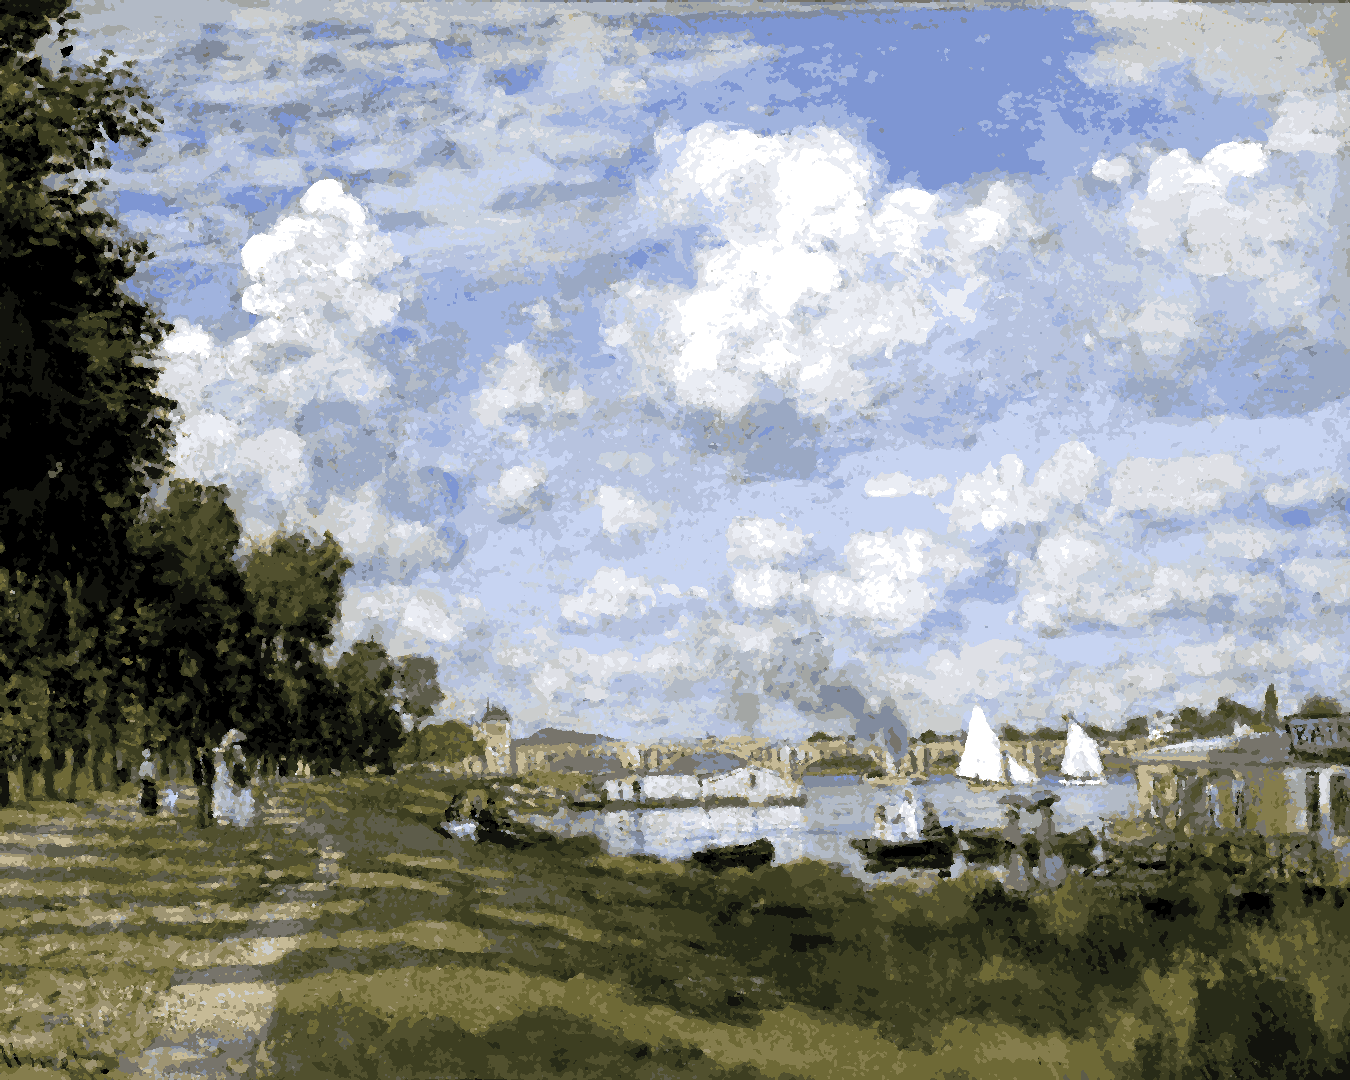 Claude Monet PD (12) - The Basin at Argenteuil - Van-Go Paint-By-Number Kit